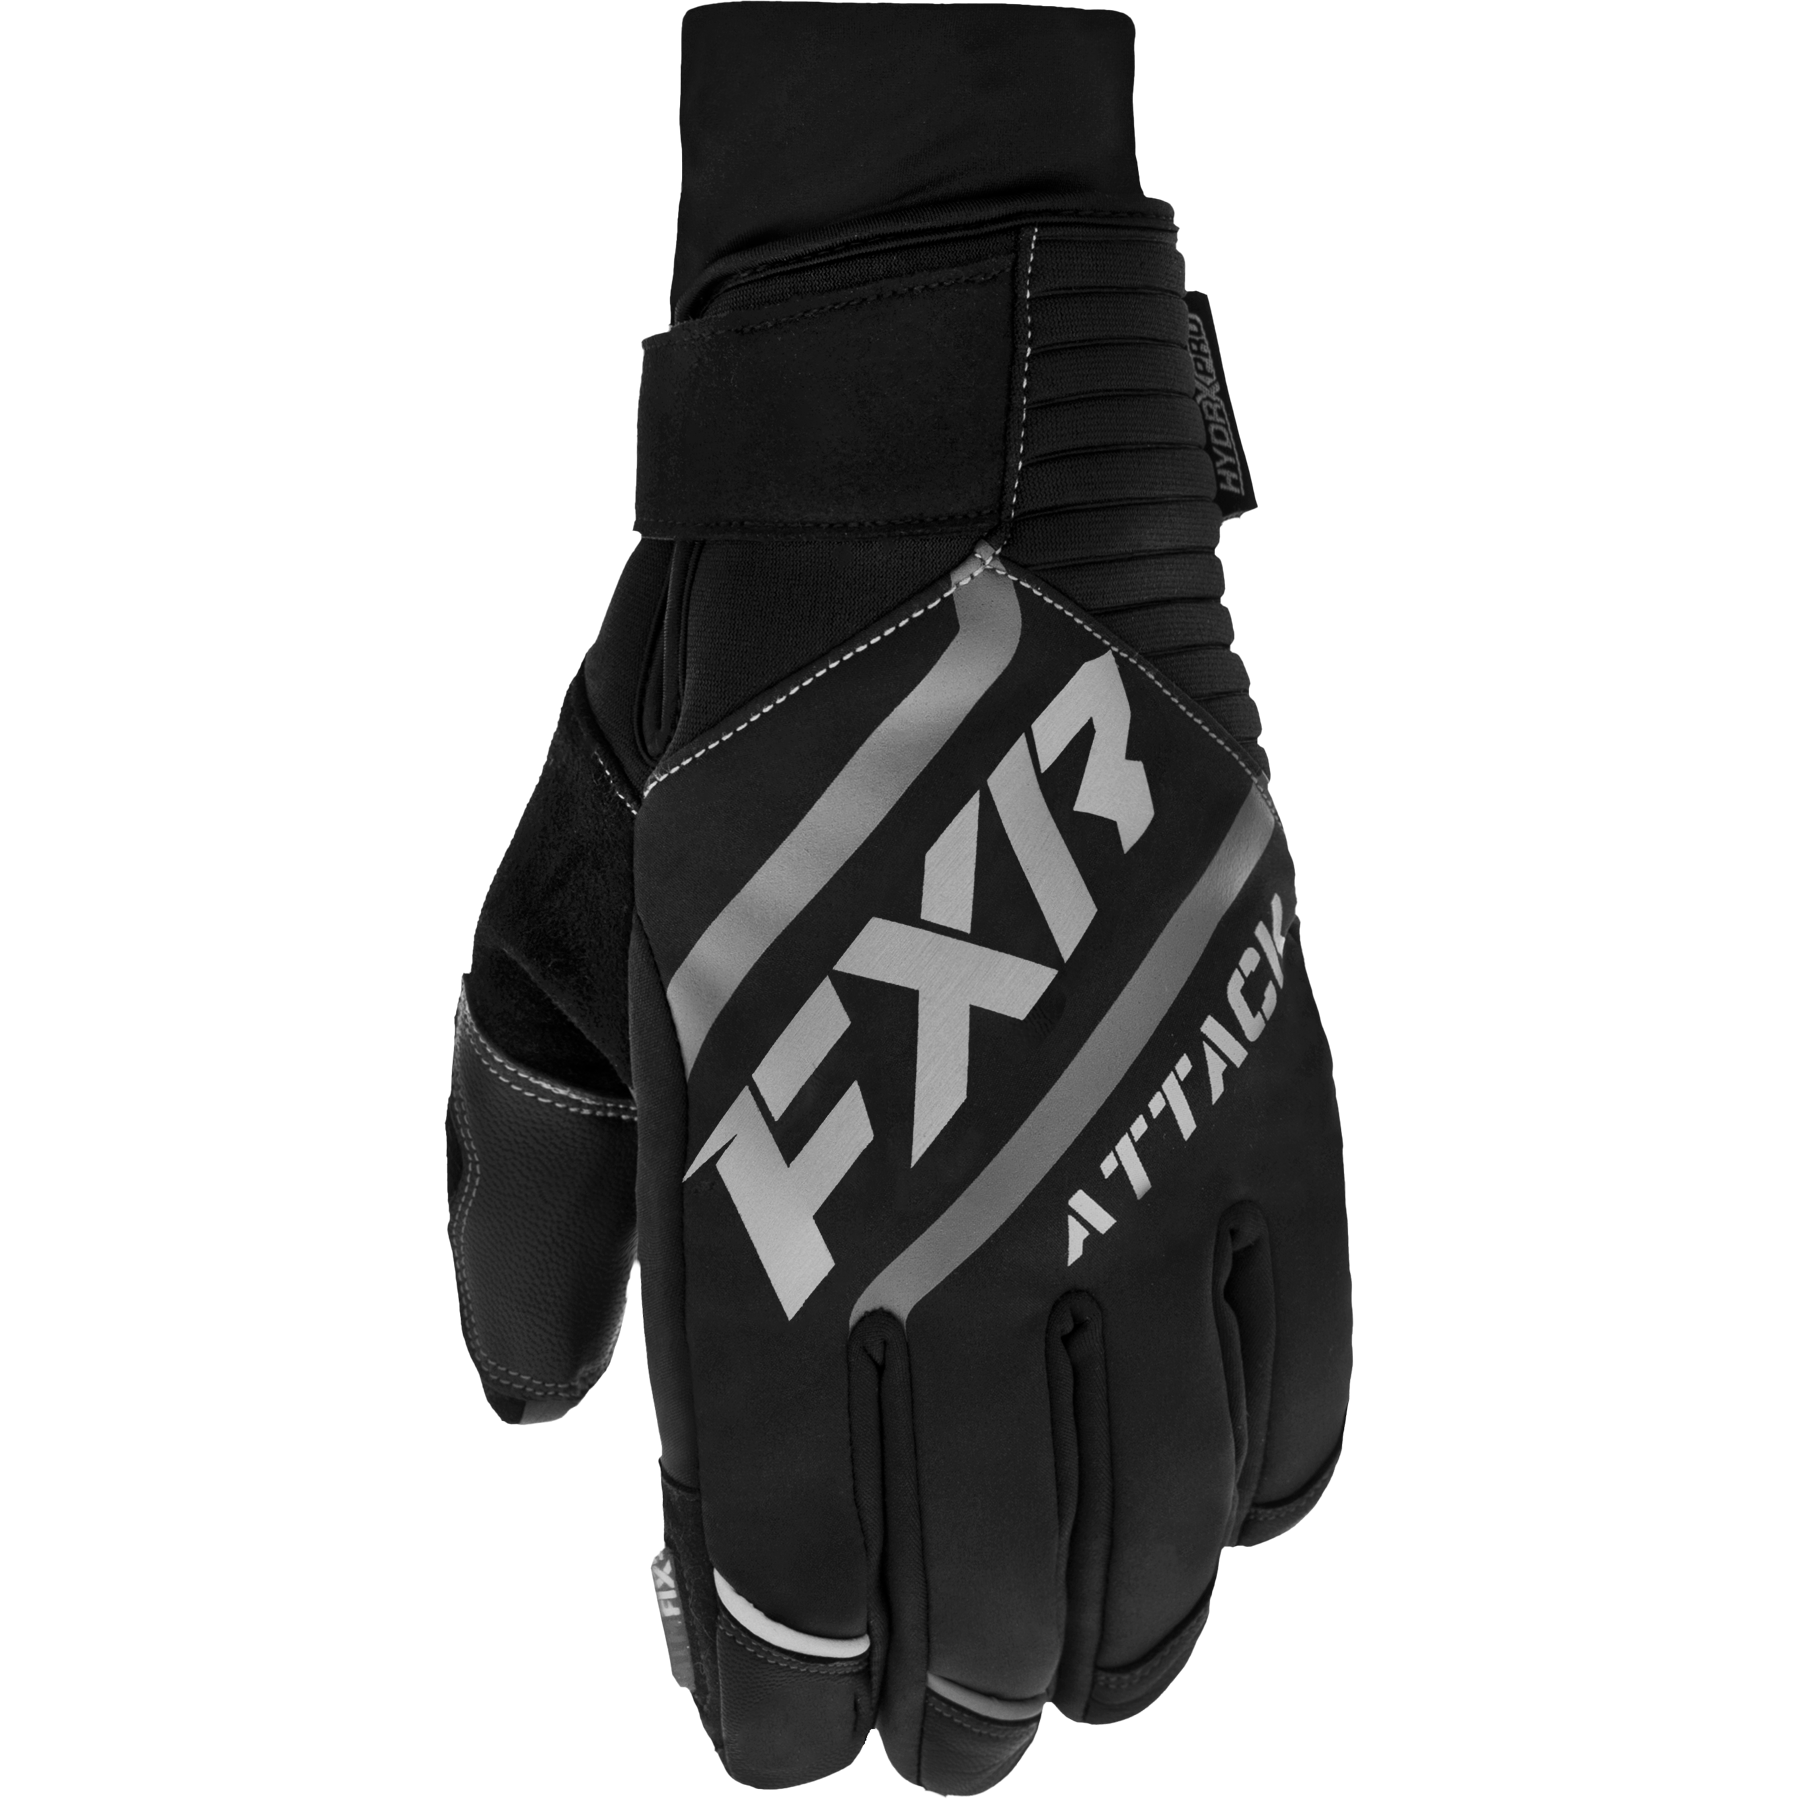 motoneige gants par fxr racing men attack insulated